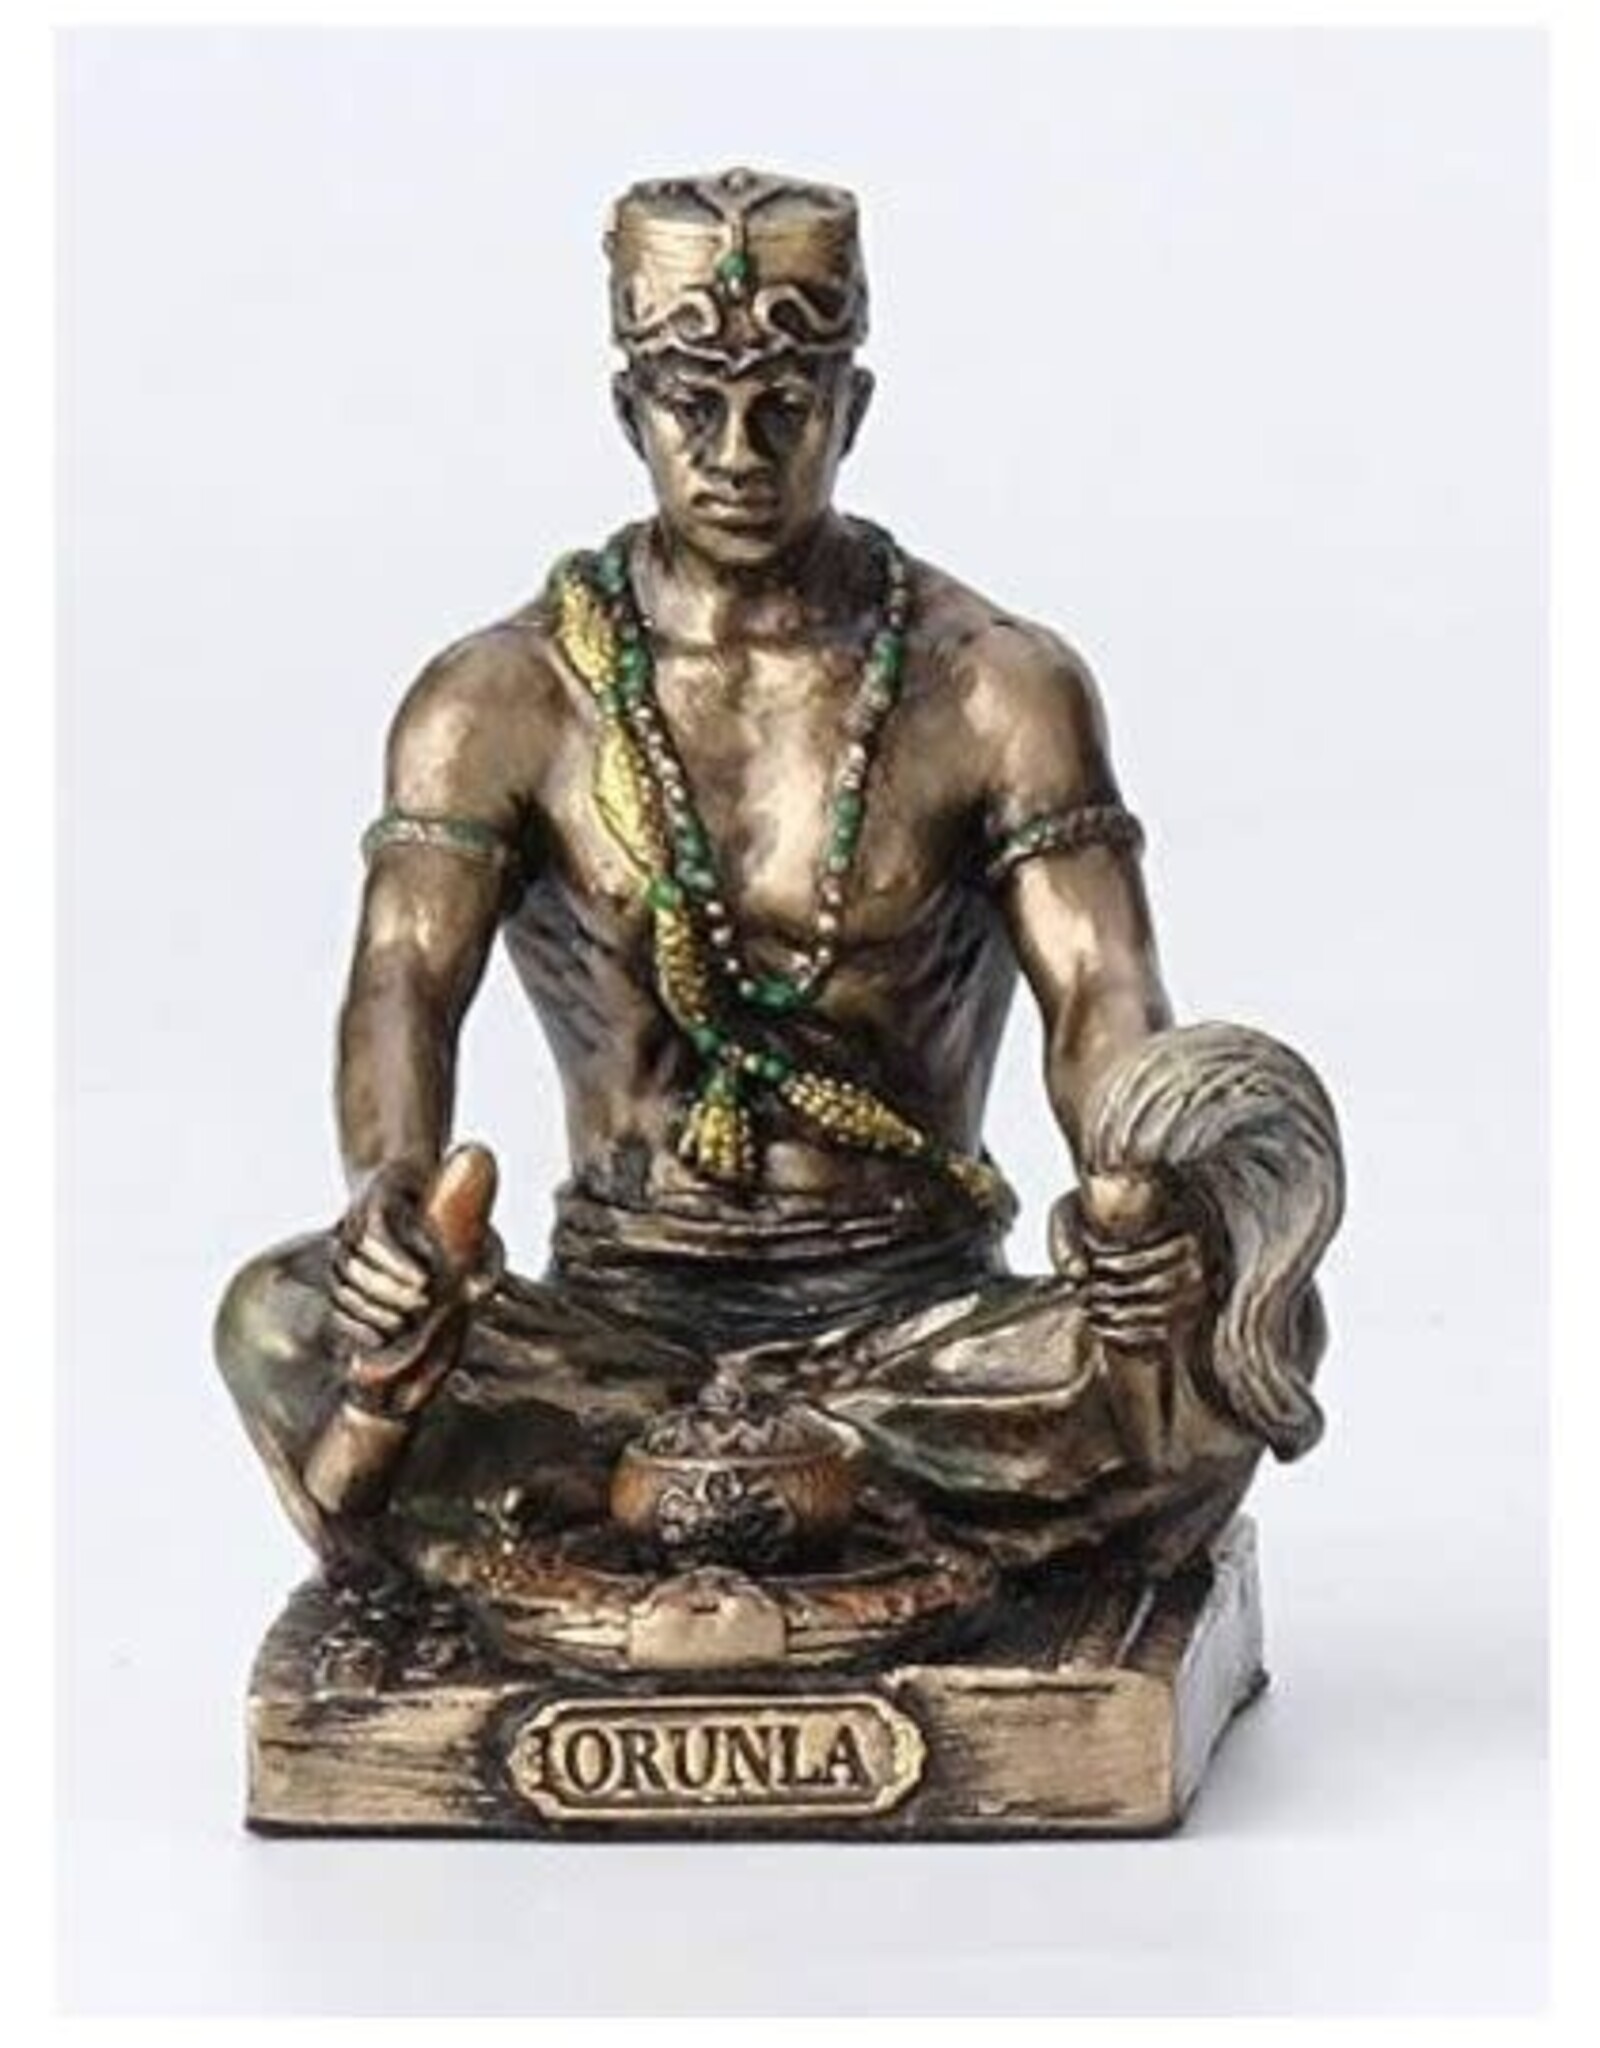 Orunla African God Statue 3"